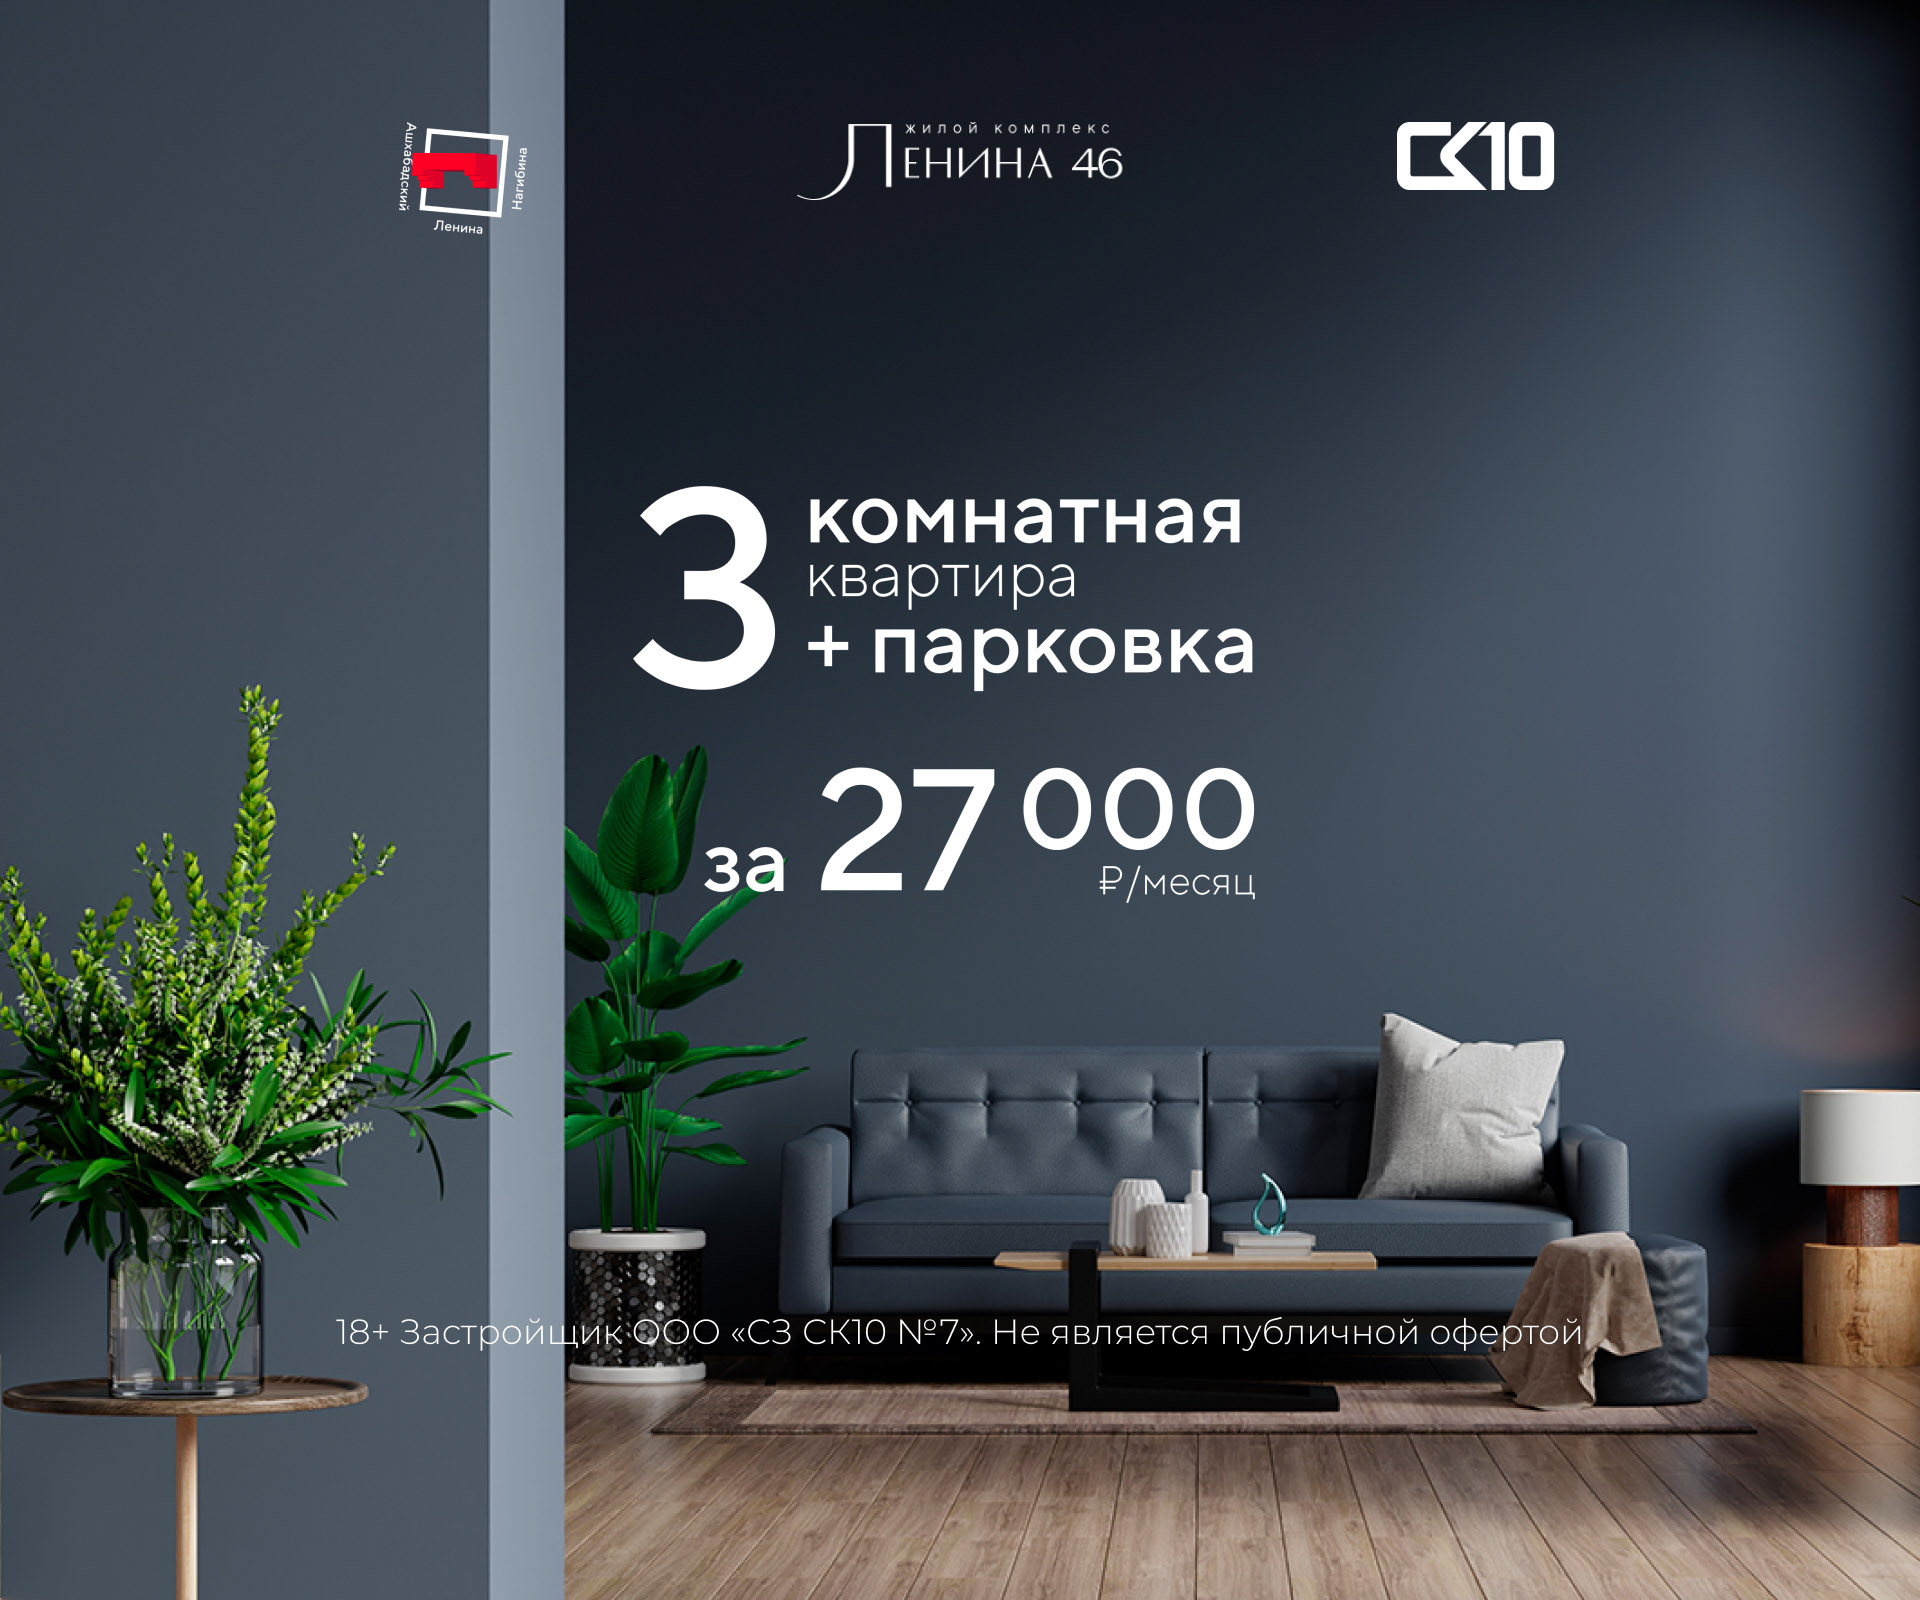 3-х комнатная квартира+парковка за 27 000 руб. в месяц!